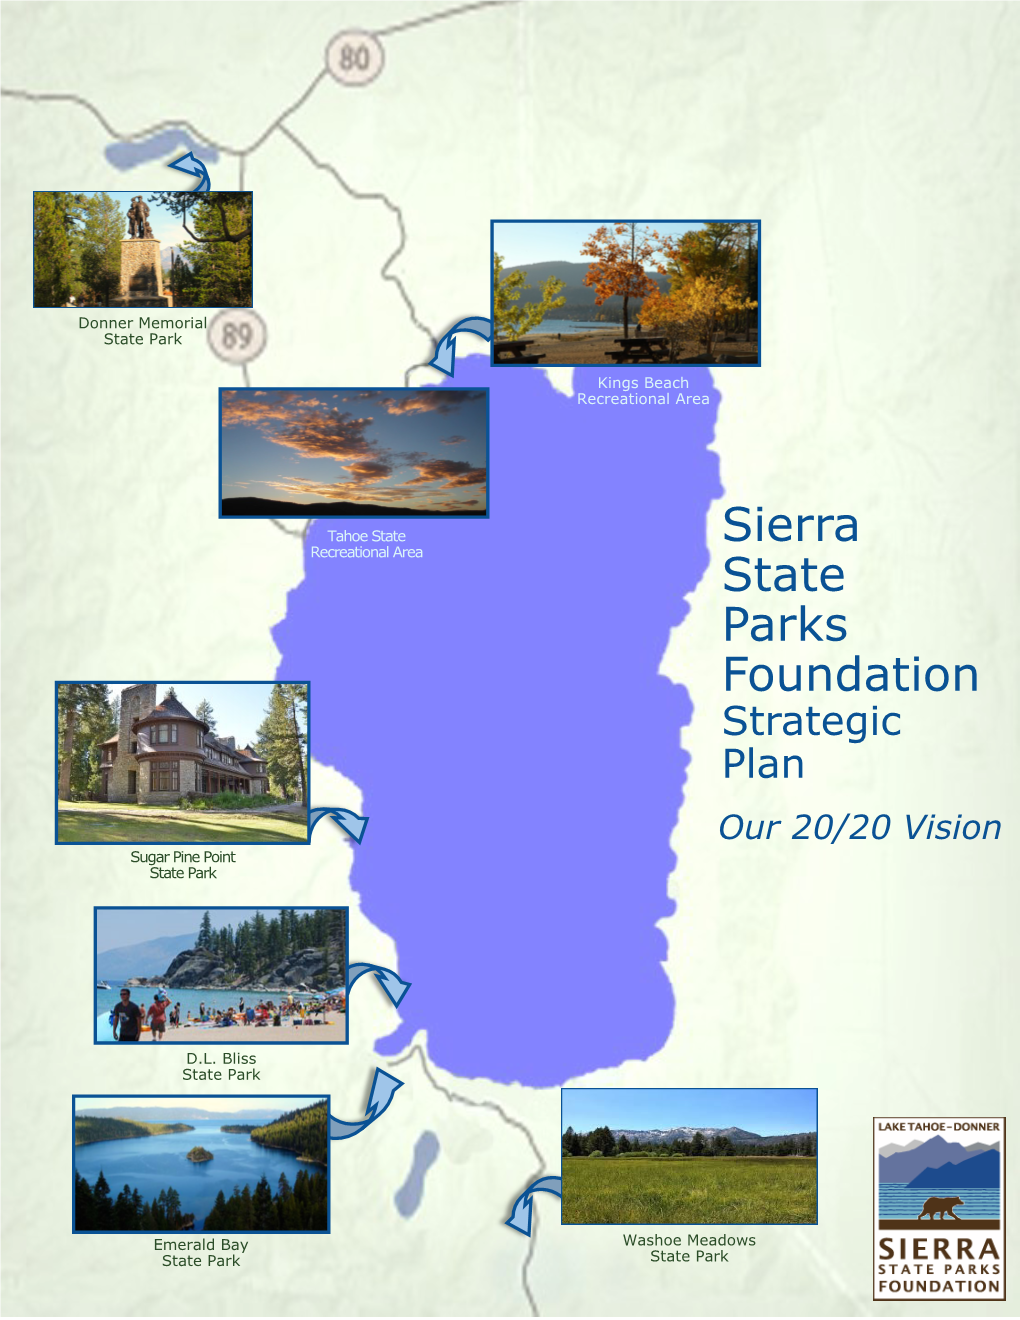 Strategic Plan Our 20/20 Vision Sugar Pine Point State Park